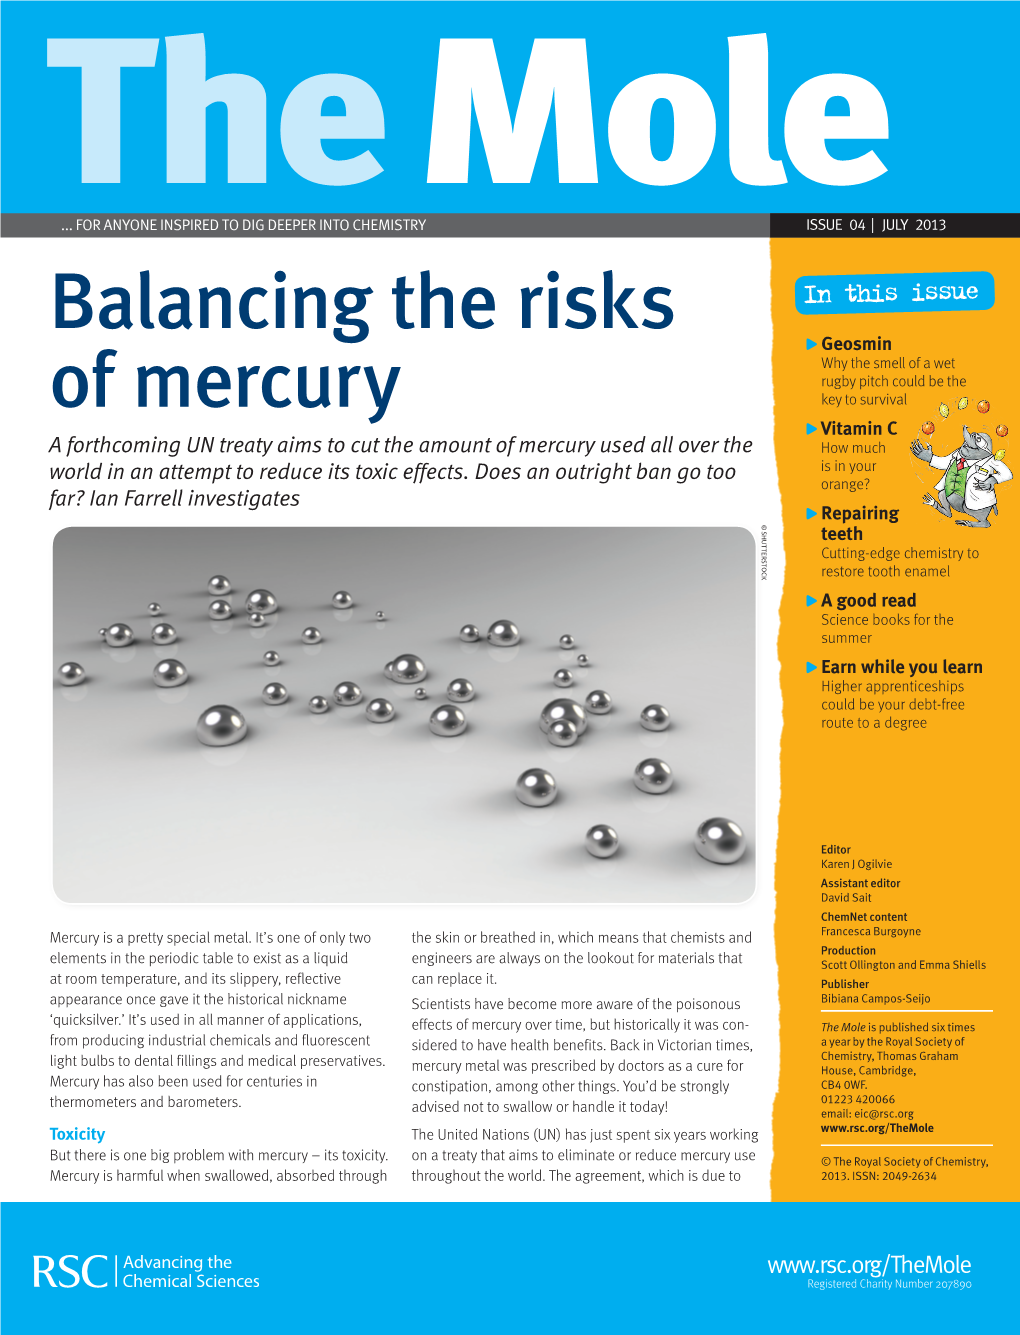 Balancing the Risks of Mercury